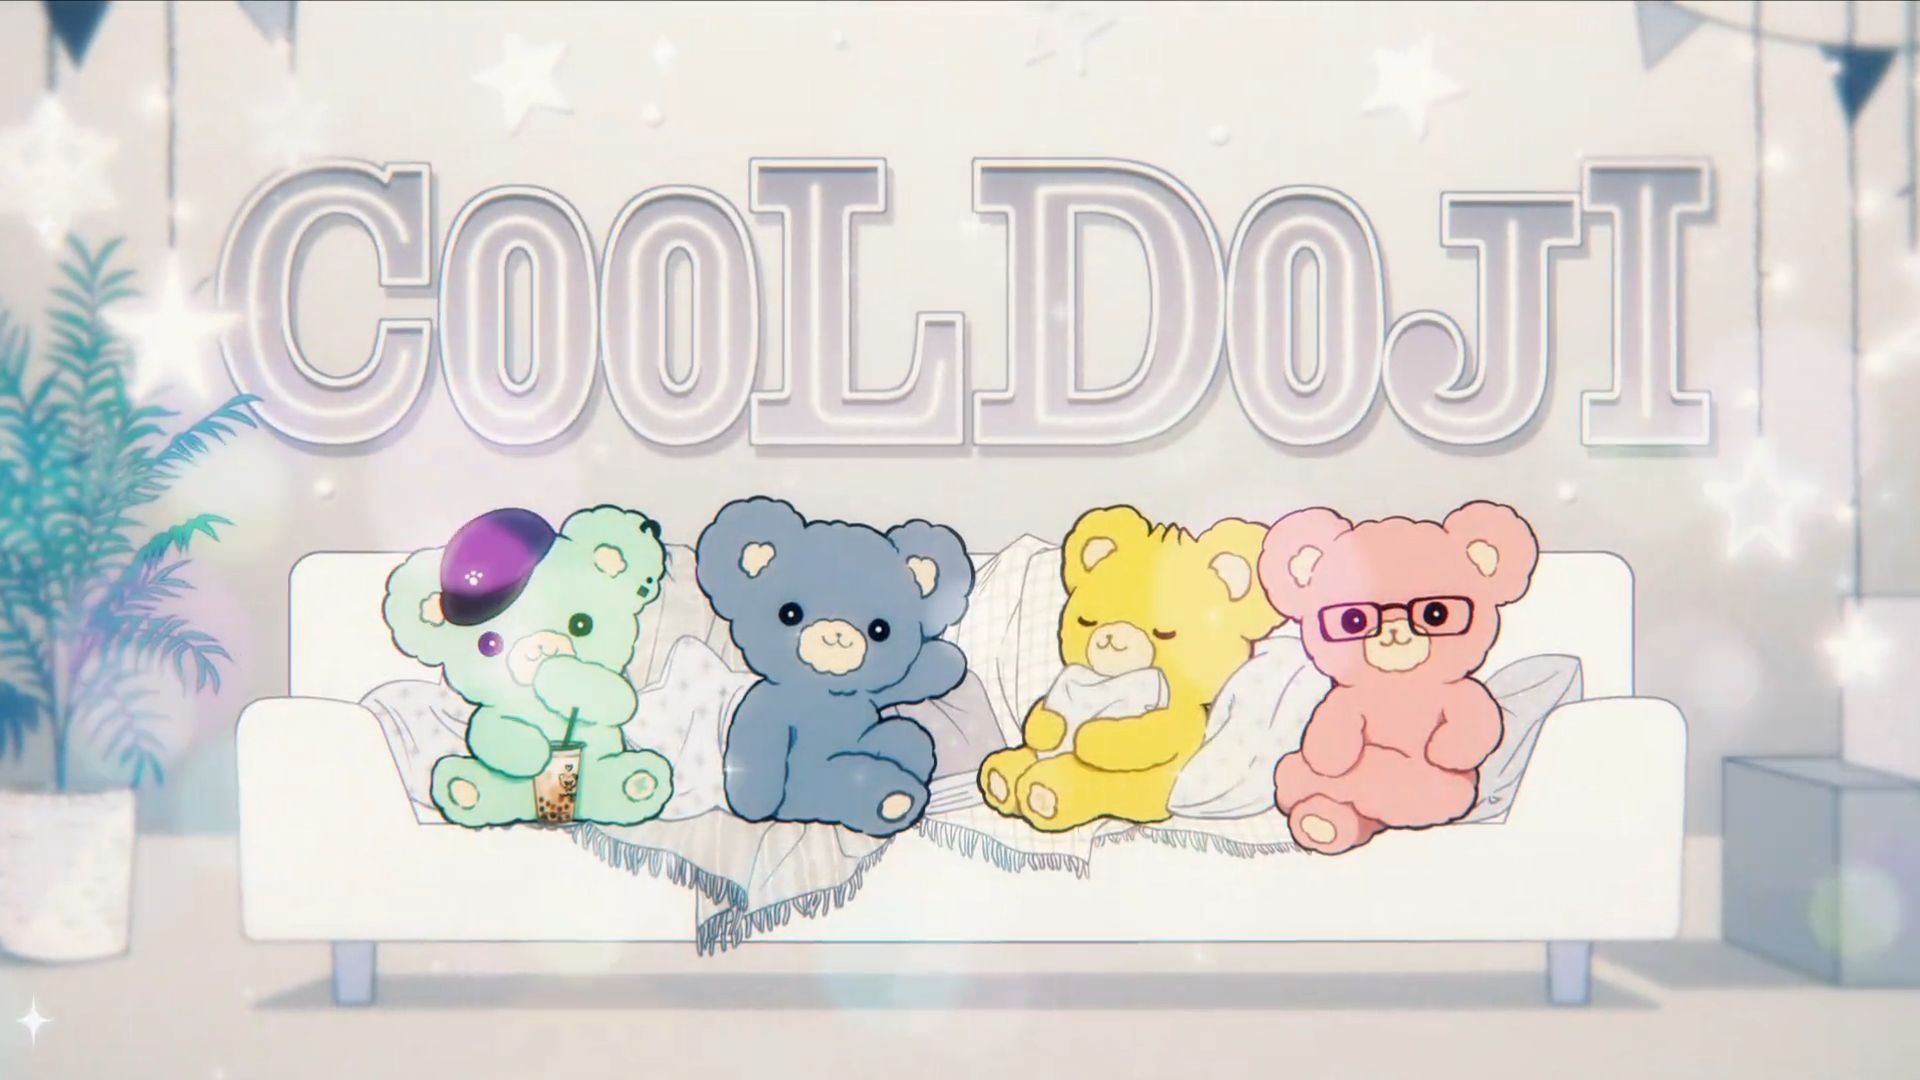 COOL DOJI DANSHI episode 01 [Live Action] Subtitle Indonesia by CHStudio♡ -  BiliBili